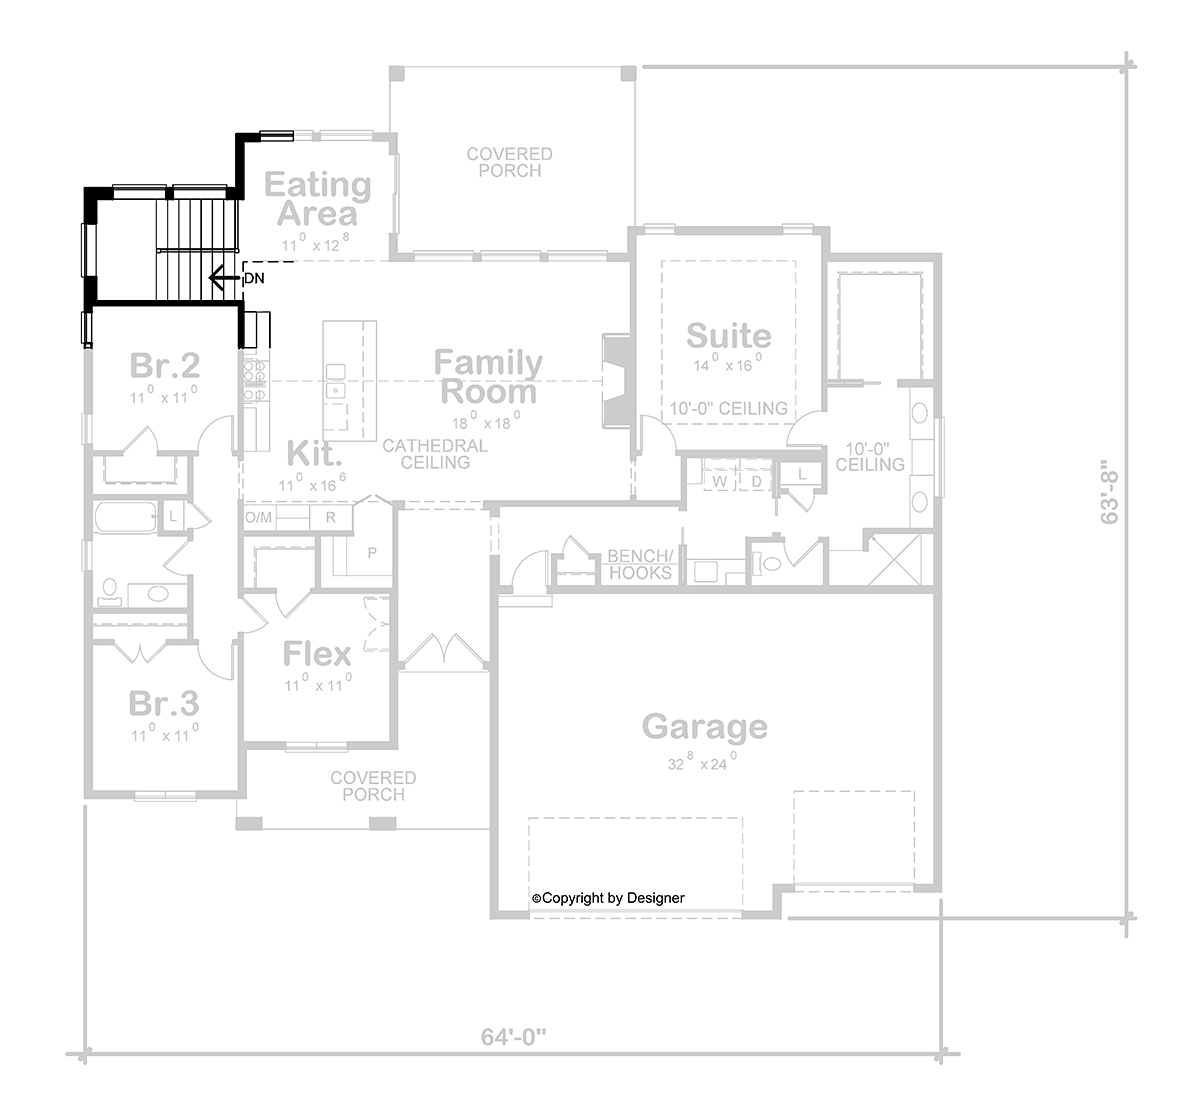 House Plan 81417 Alternate Level One